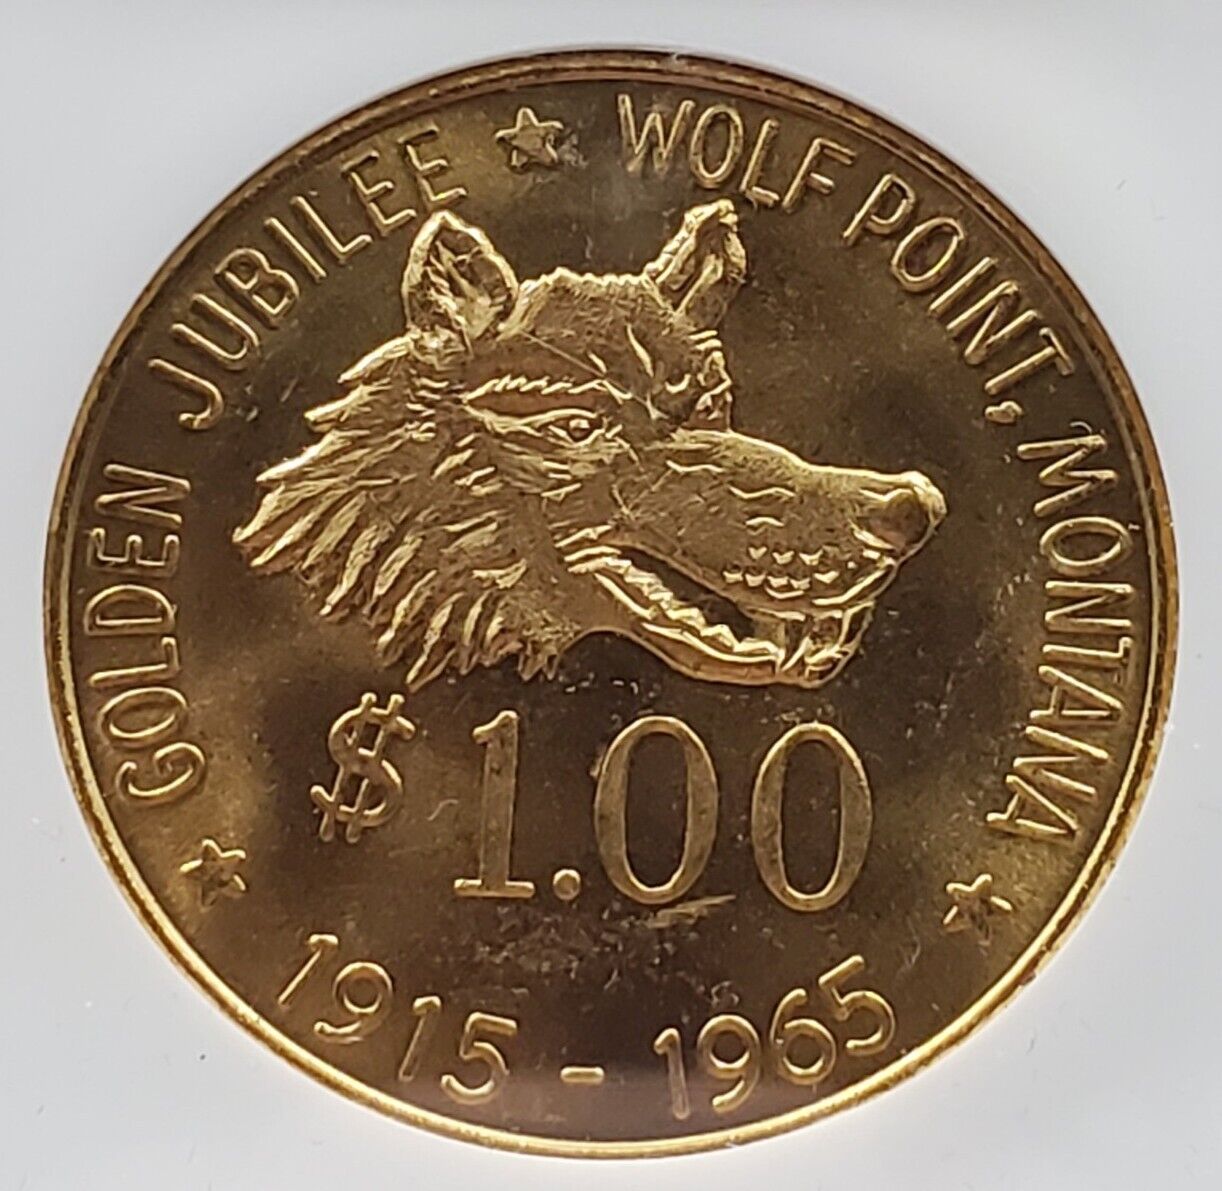 1965 So Called Dollar $1 Wolf Point 75th Anniversary NGC Token MS65 Gem BU